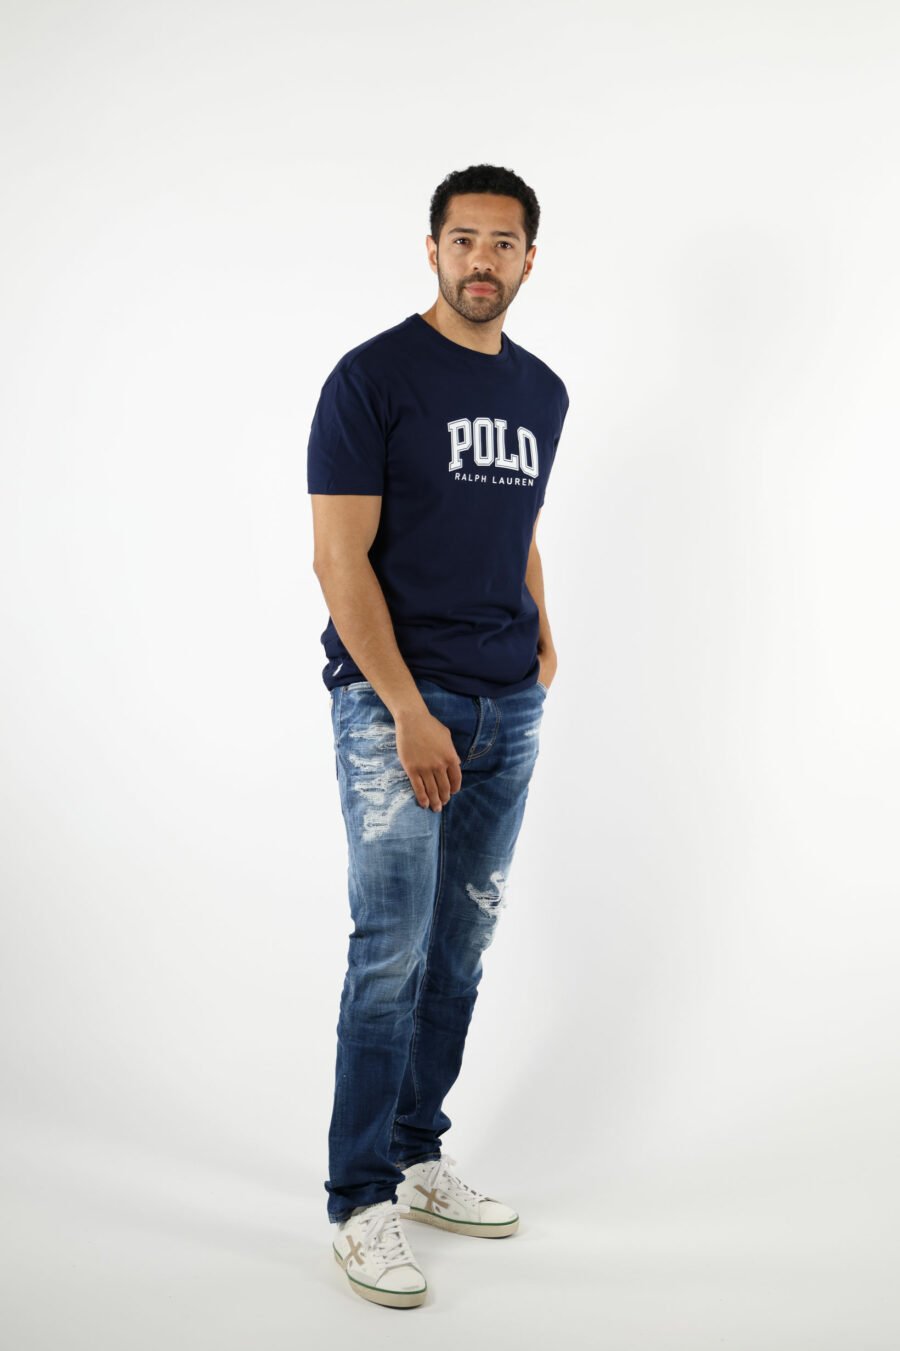 T-shirt bleu foncé avec maxilogo "polo" blanc - 111233